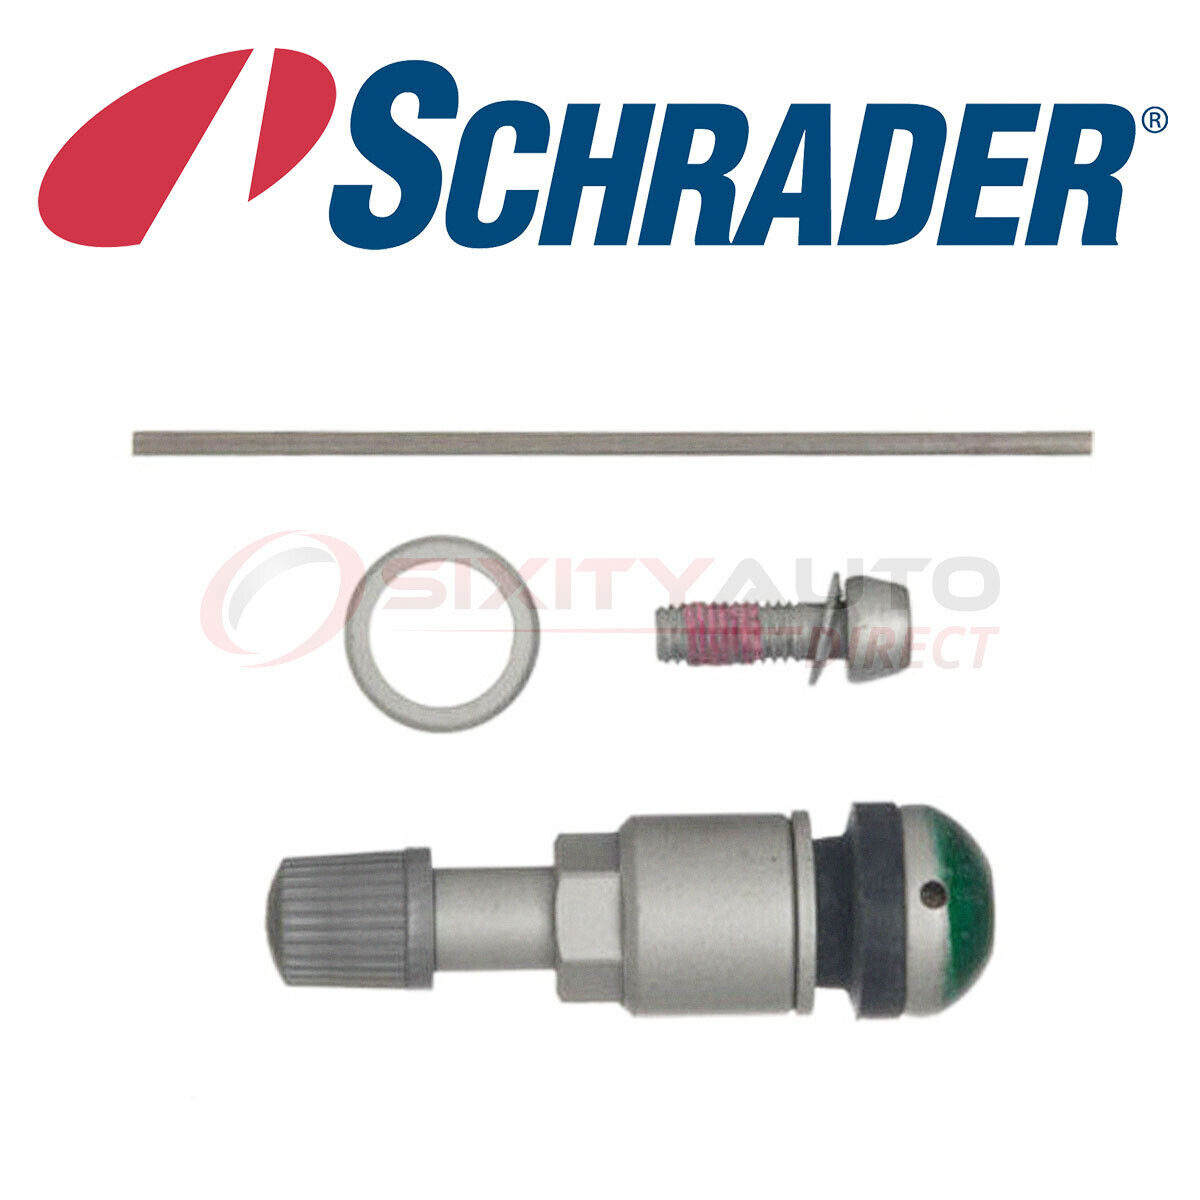 Schrader Tire Pressure Monitoring TPMS Sensor Service for 1998-2000 Ferrari kg